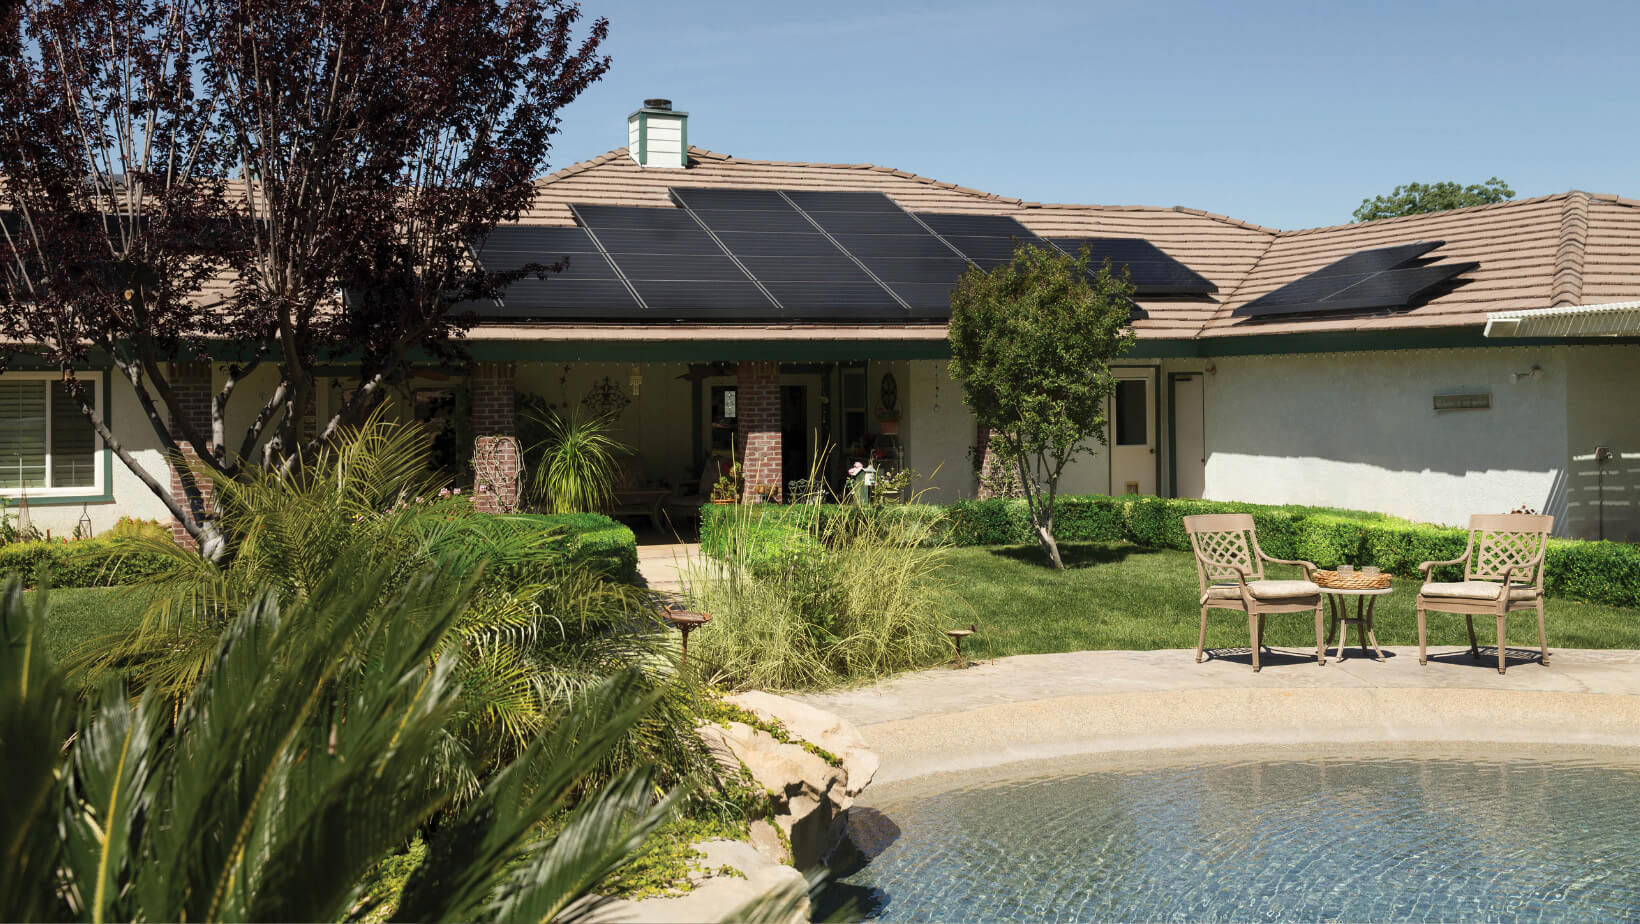 solar panels facing south in calfornia